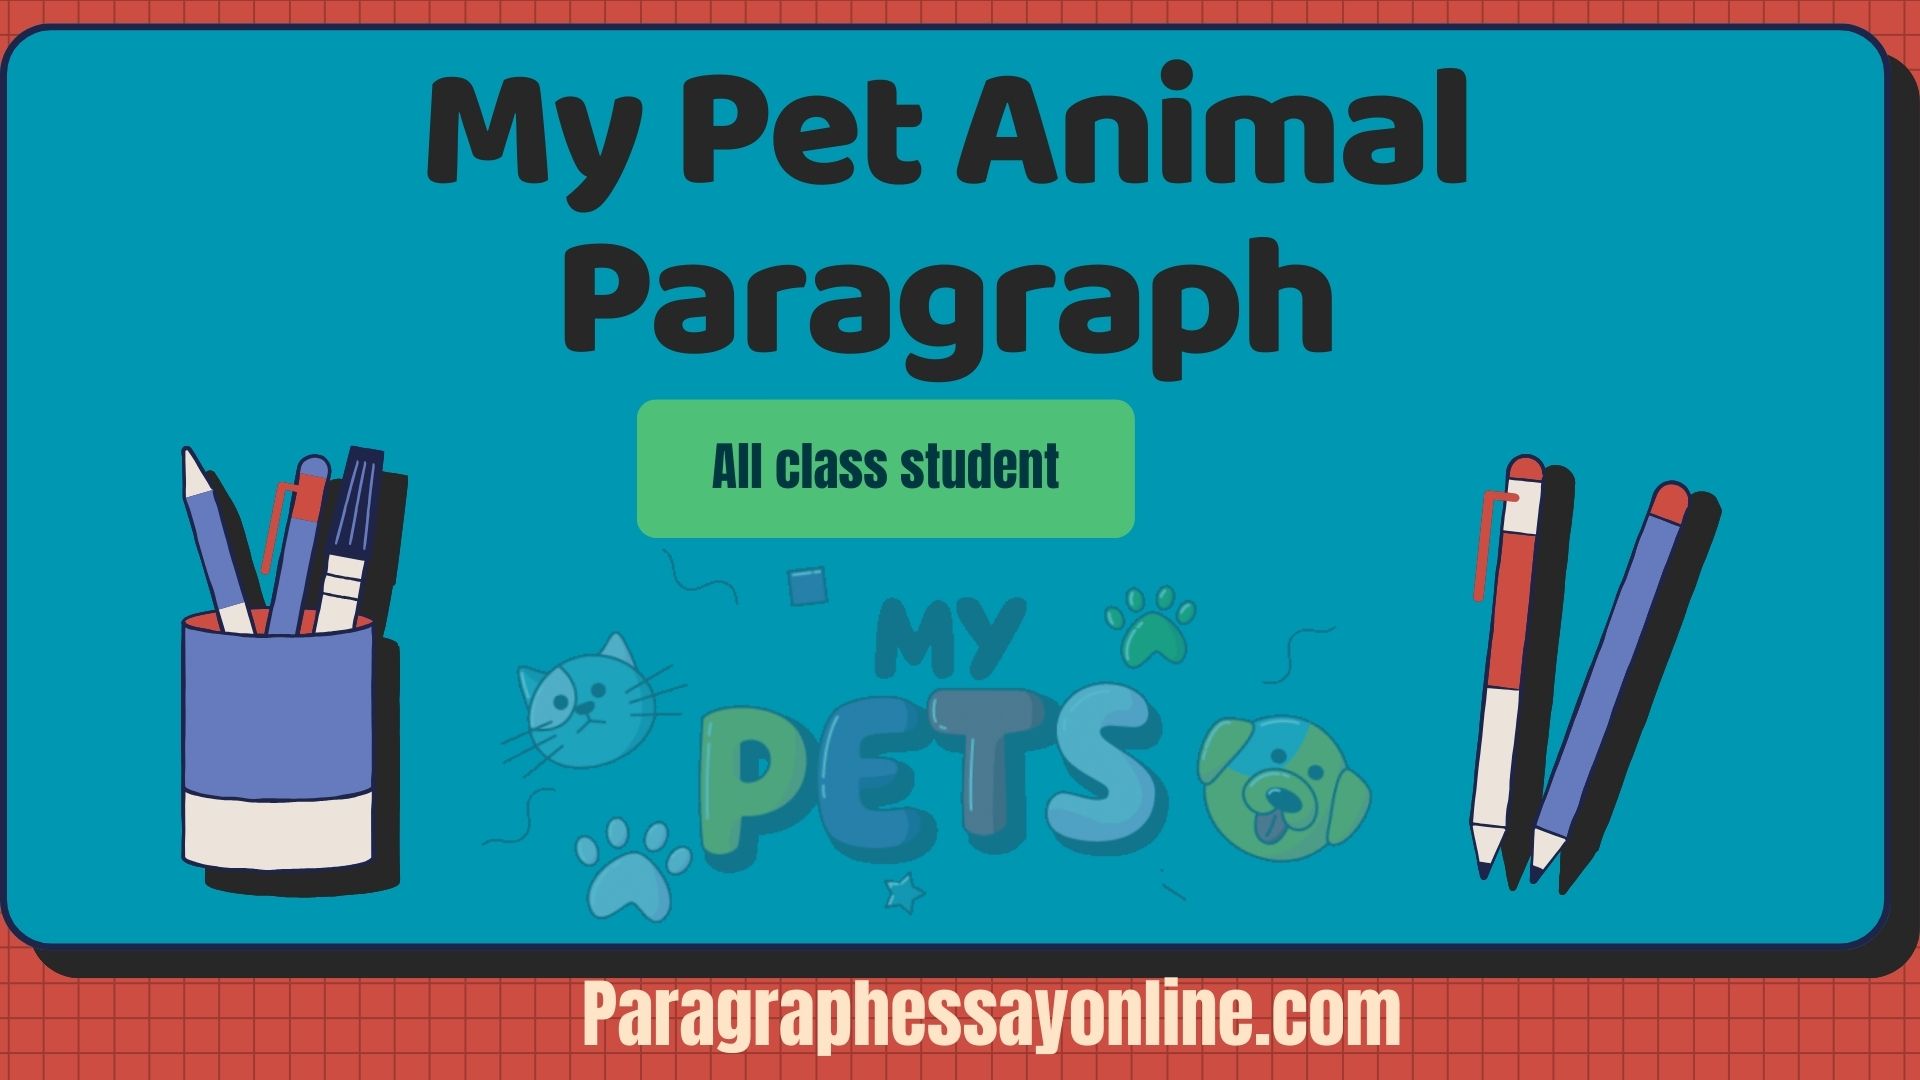 My Pet Animal Paragraph